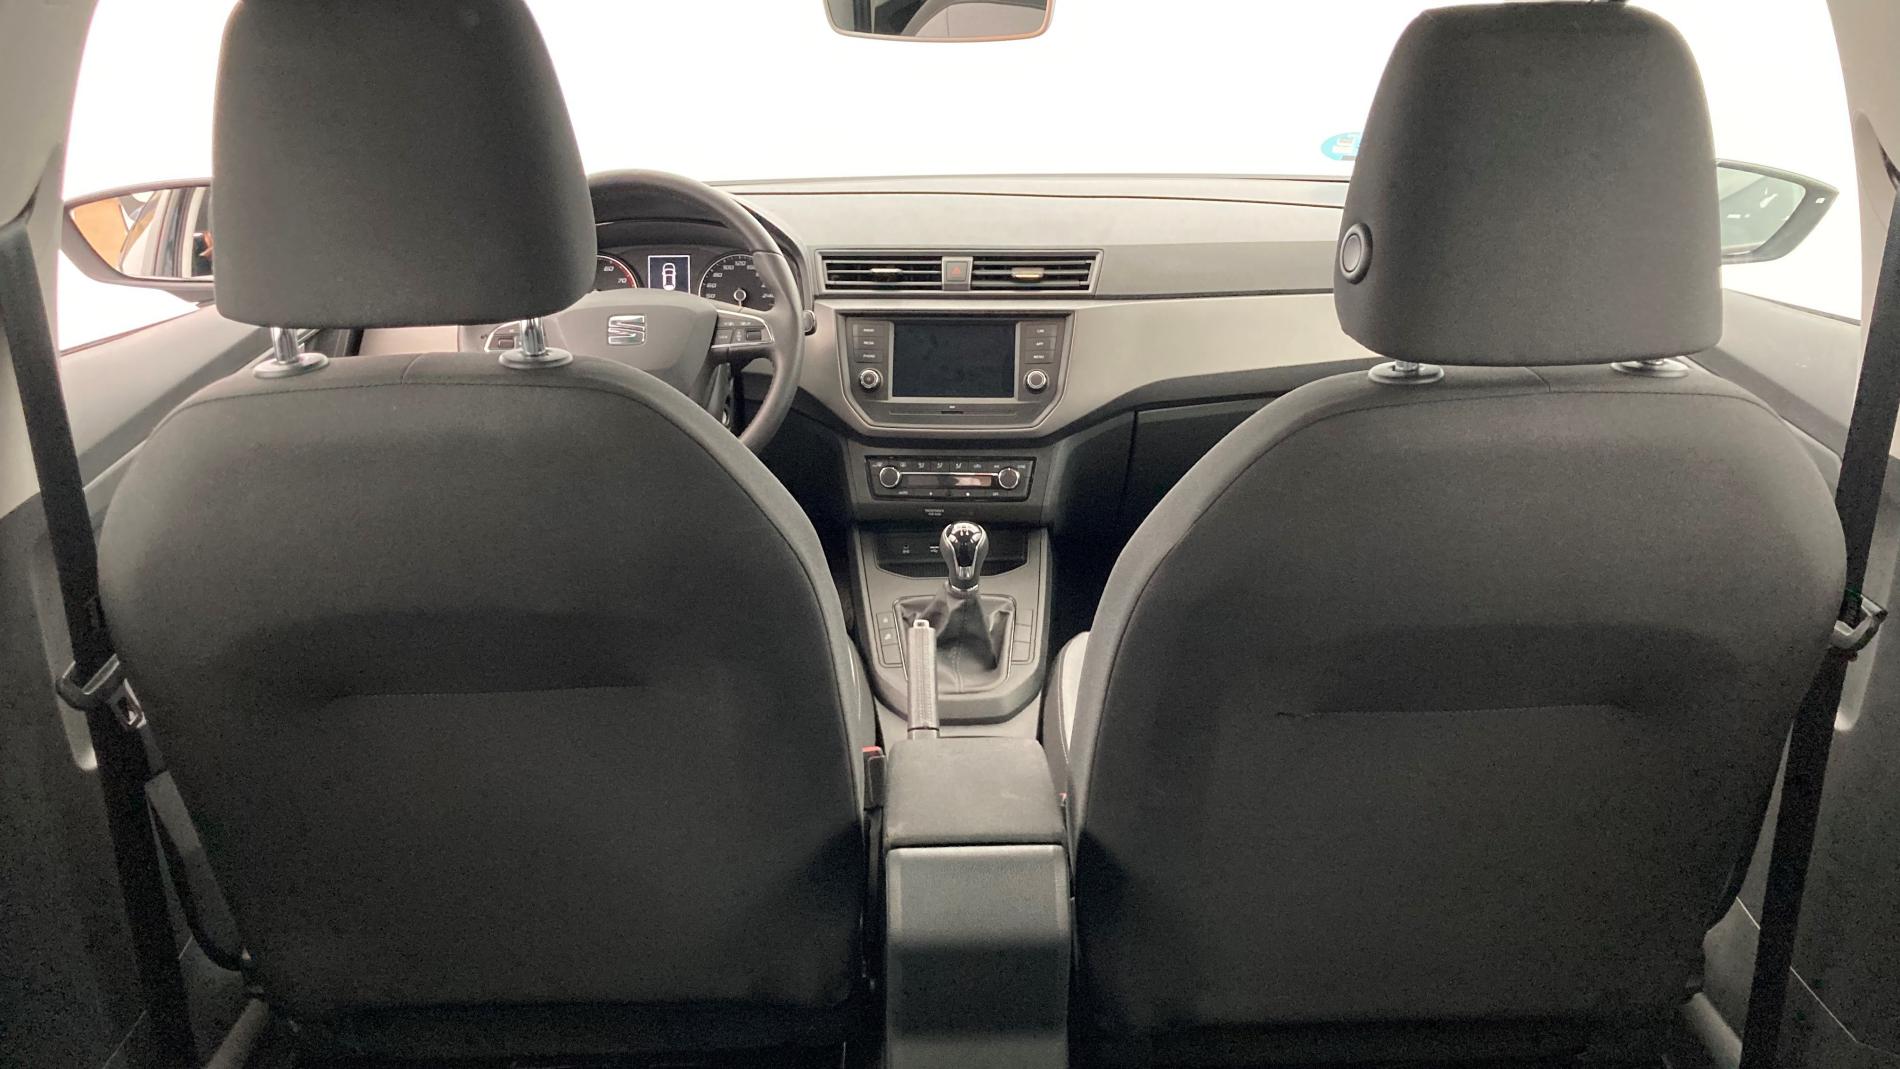 seat ibiza style 1.0 MPI 80 2019 gris magnetic 11